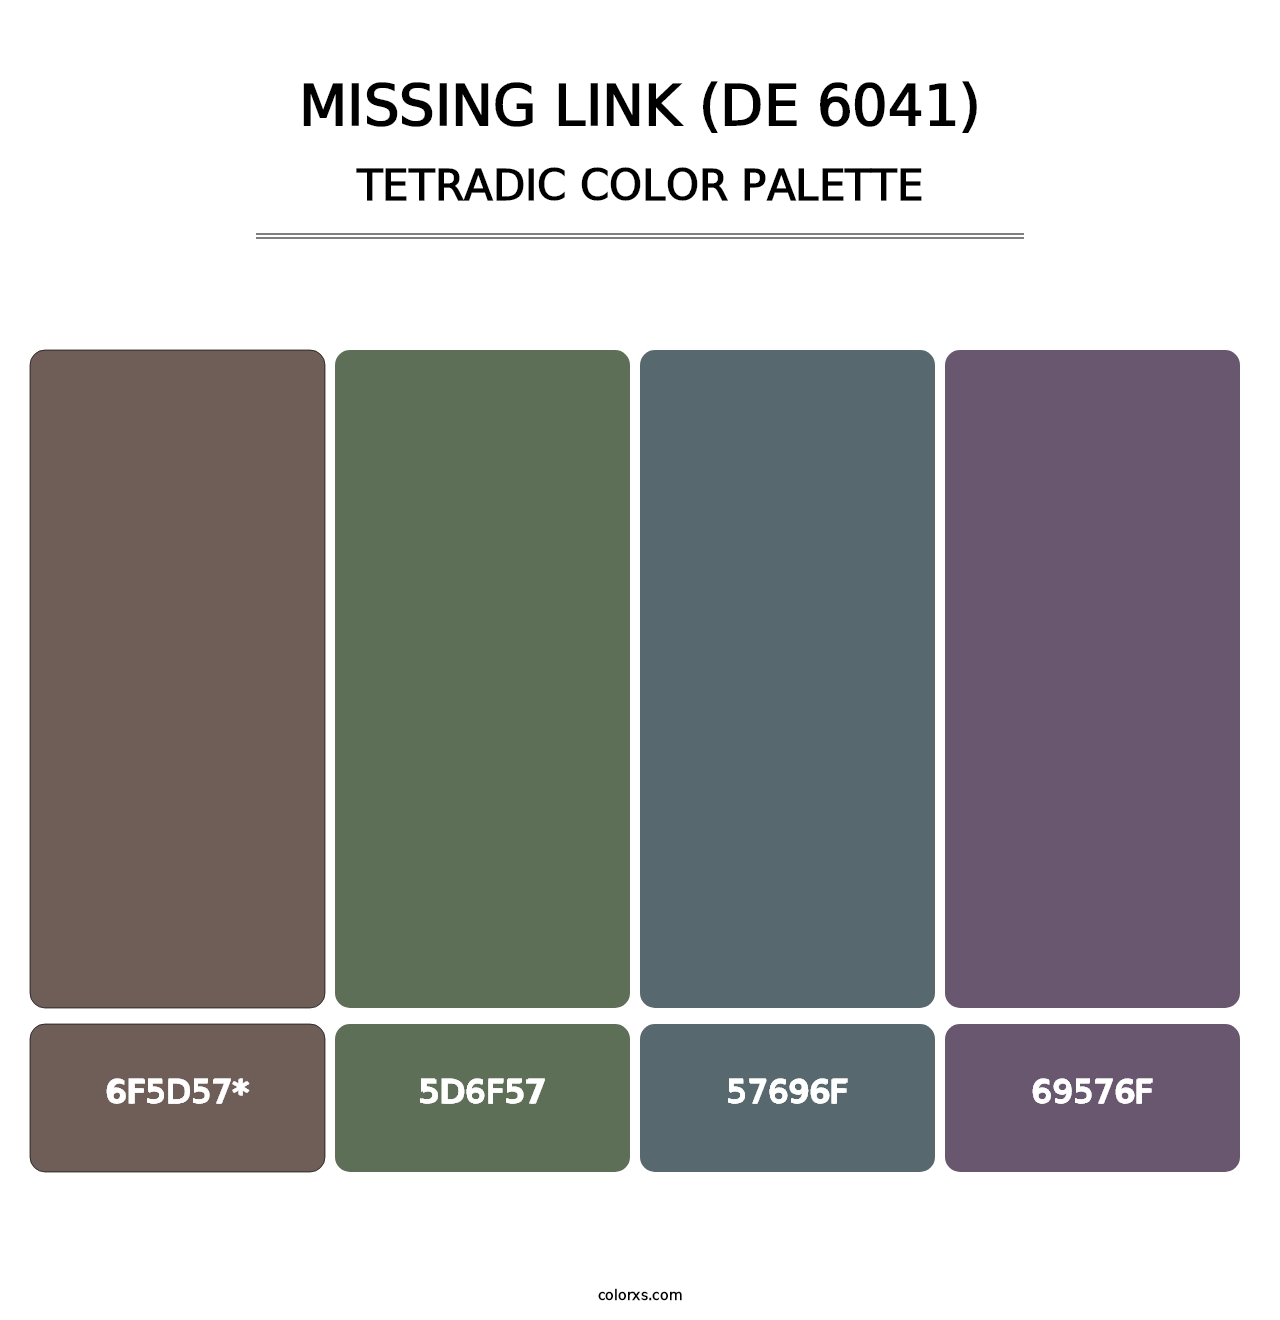 Missing Link (DE 6041) - Tetradic Color Palette